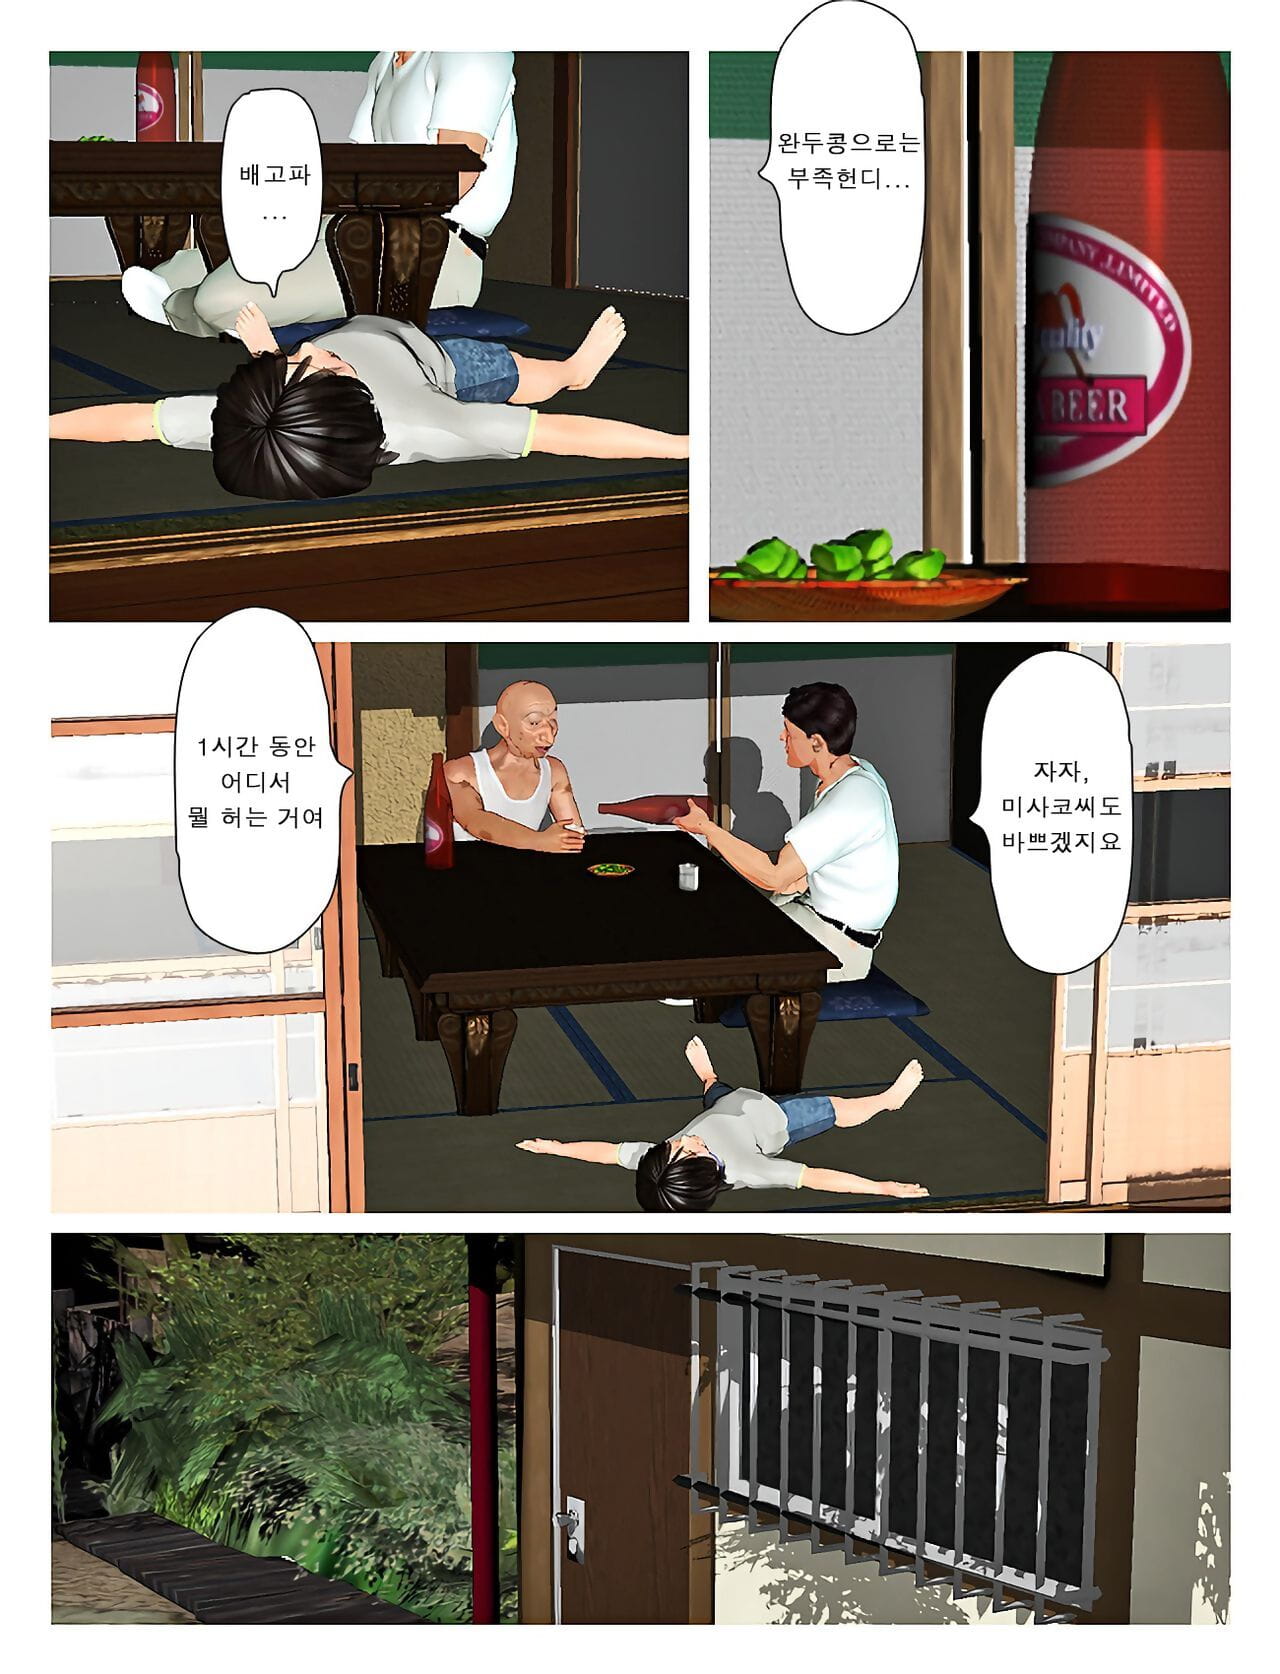 Matar o Rei kyou nenhum misako san 2019:3 오늘의 미사코씨 2019:3 Coreano page 1